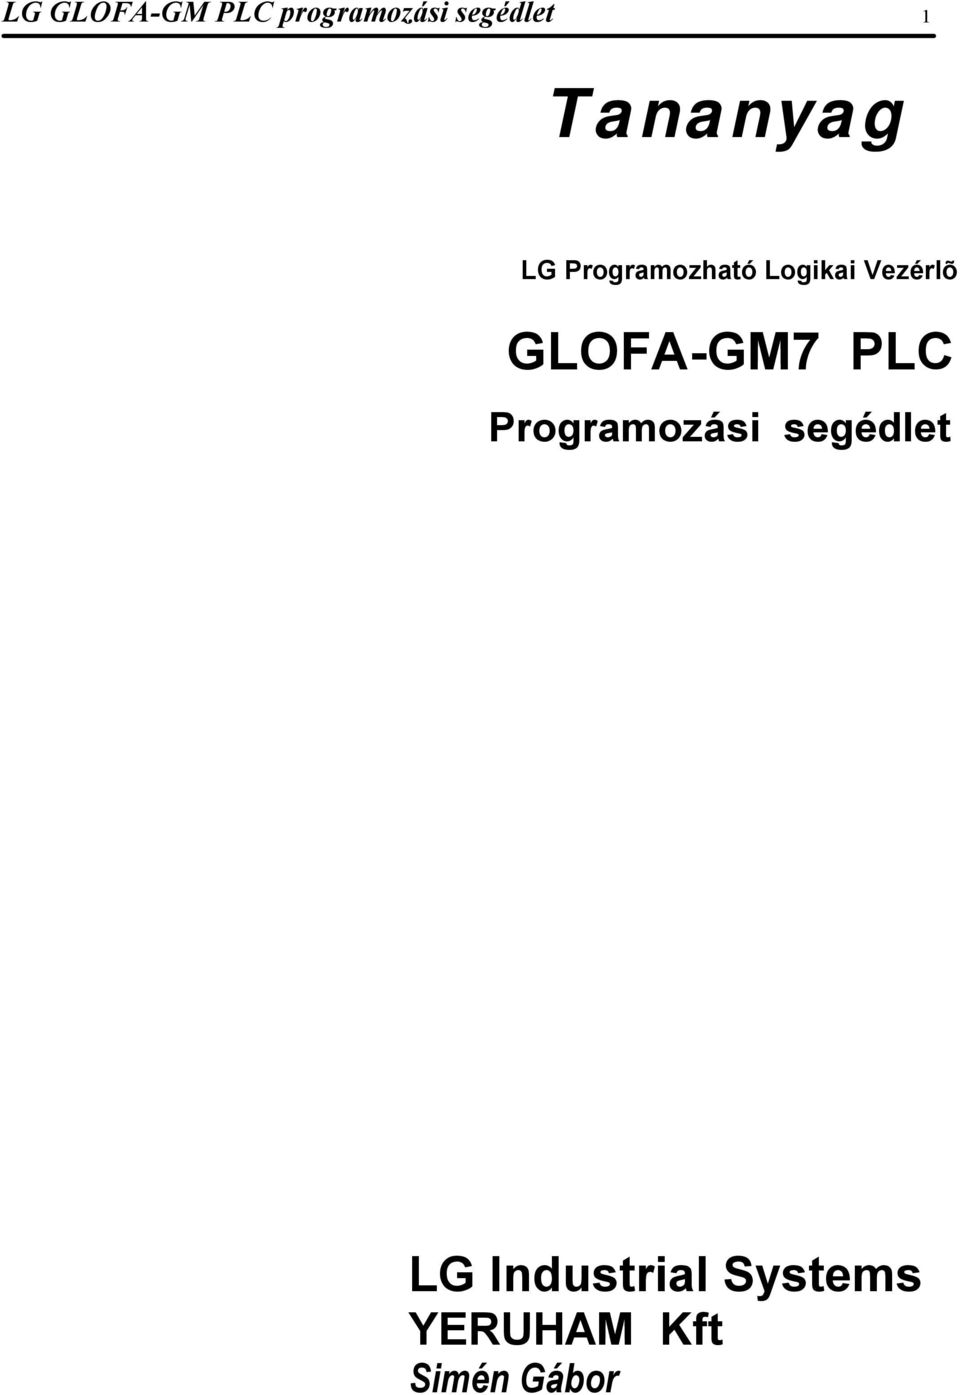 GLOFA-GM7 PLC. LG Industrial Systems YERUHAM Kft. Programozási segédlet.  Simén Gábor. LG GLOFA-GM PLC programozási segédlet 1 - PDF Ingyenes letöltés